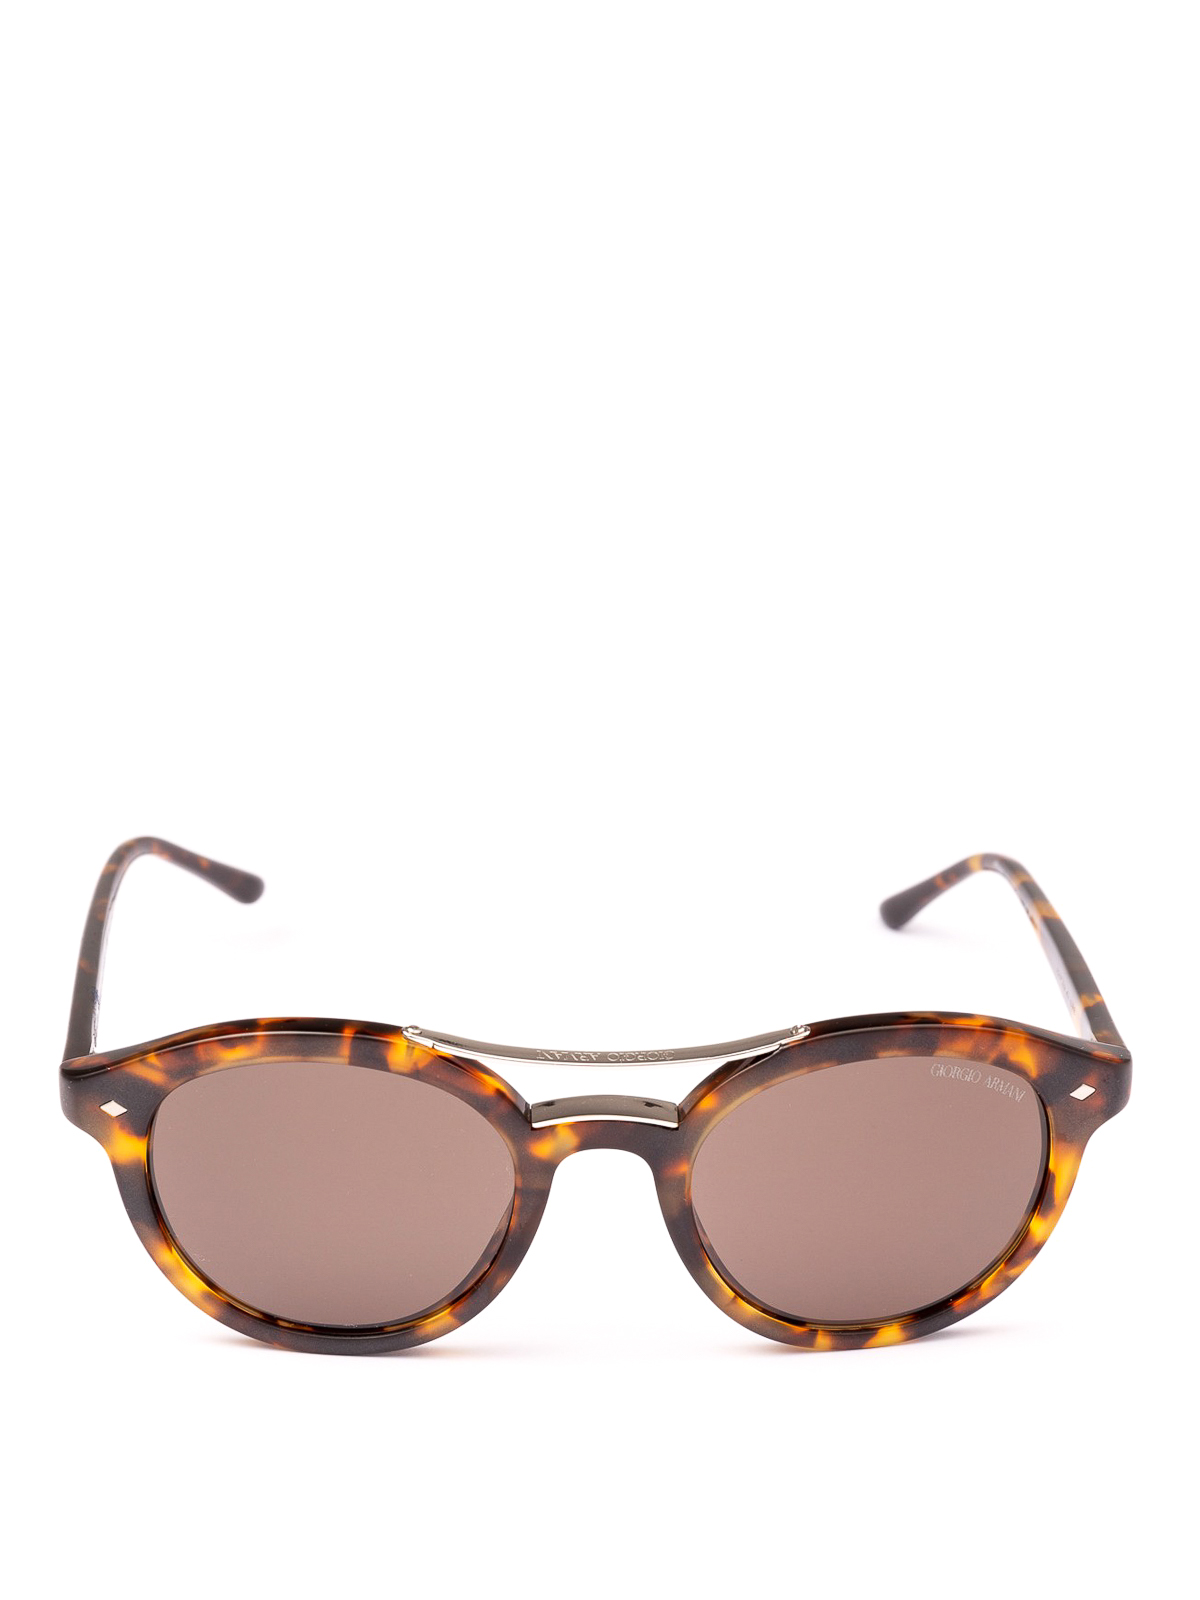 Sunglasses Giorgio Armani - Matte havana panto sunglasses - AR8007501153